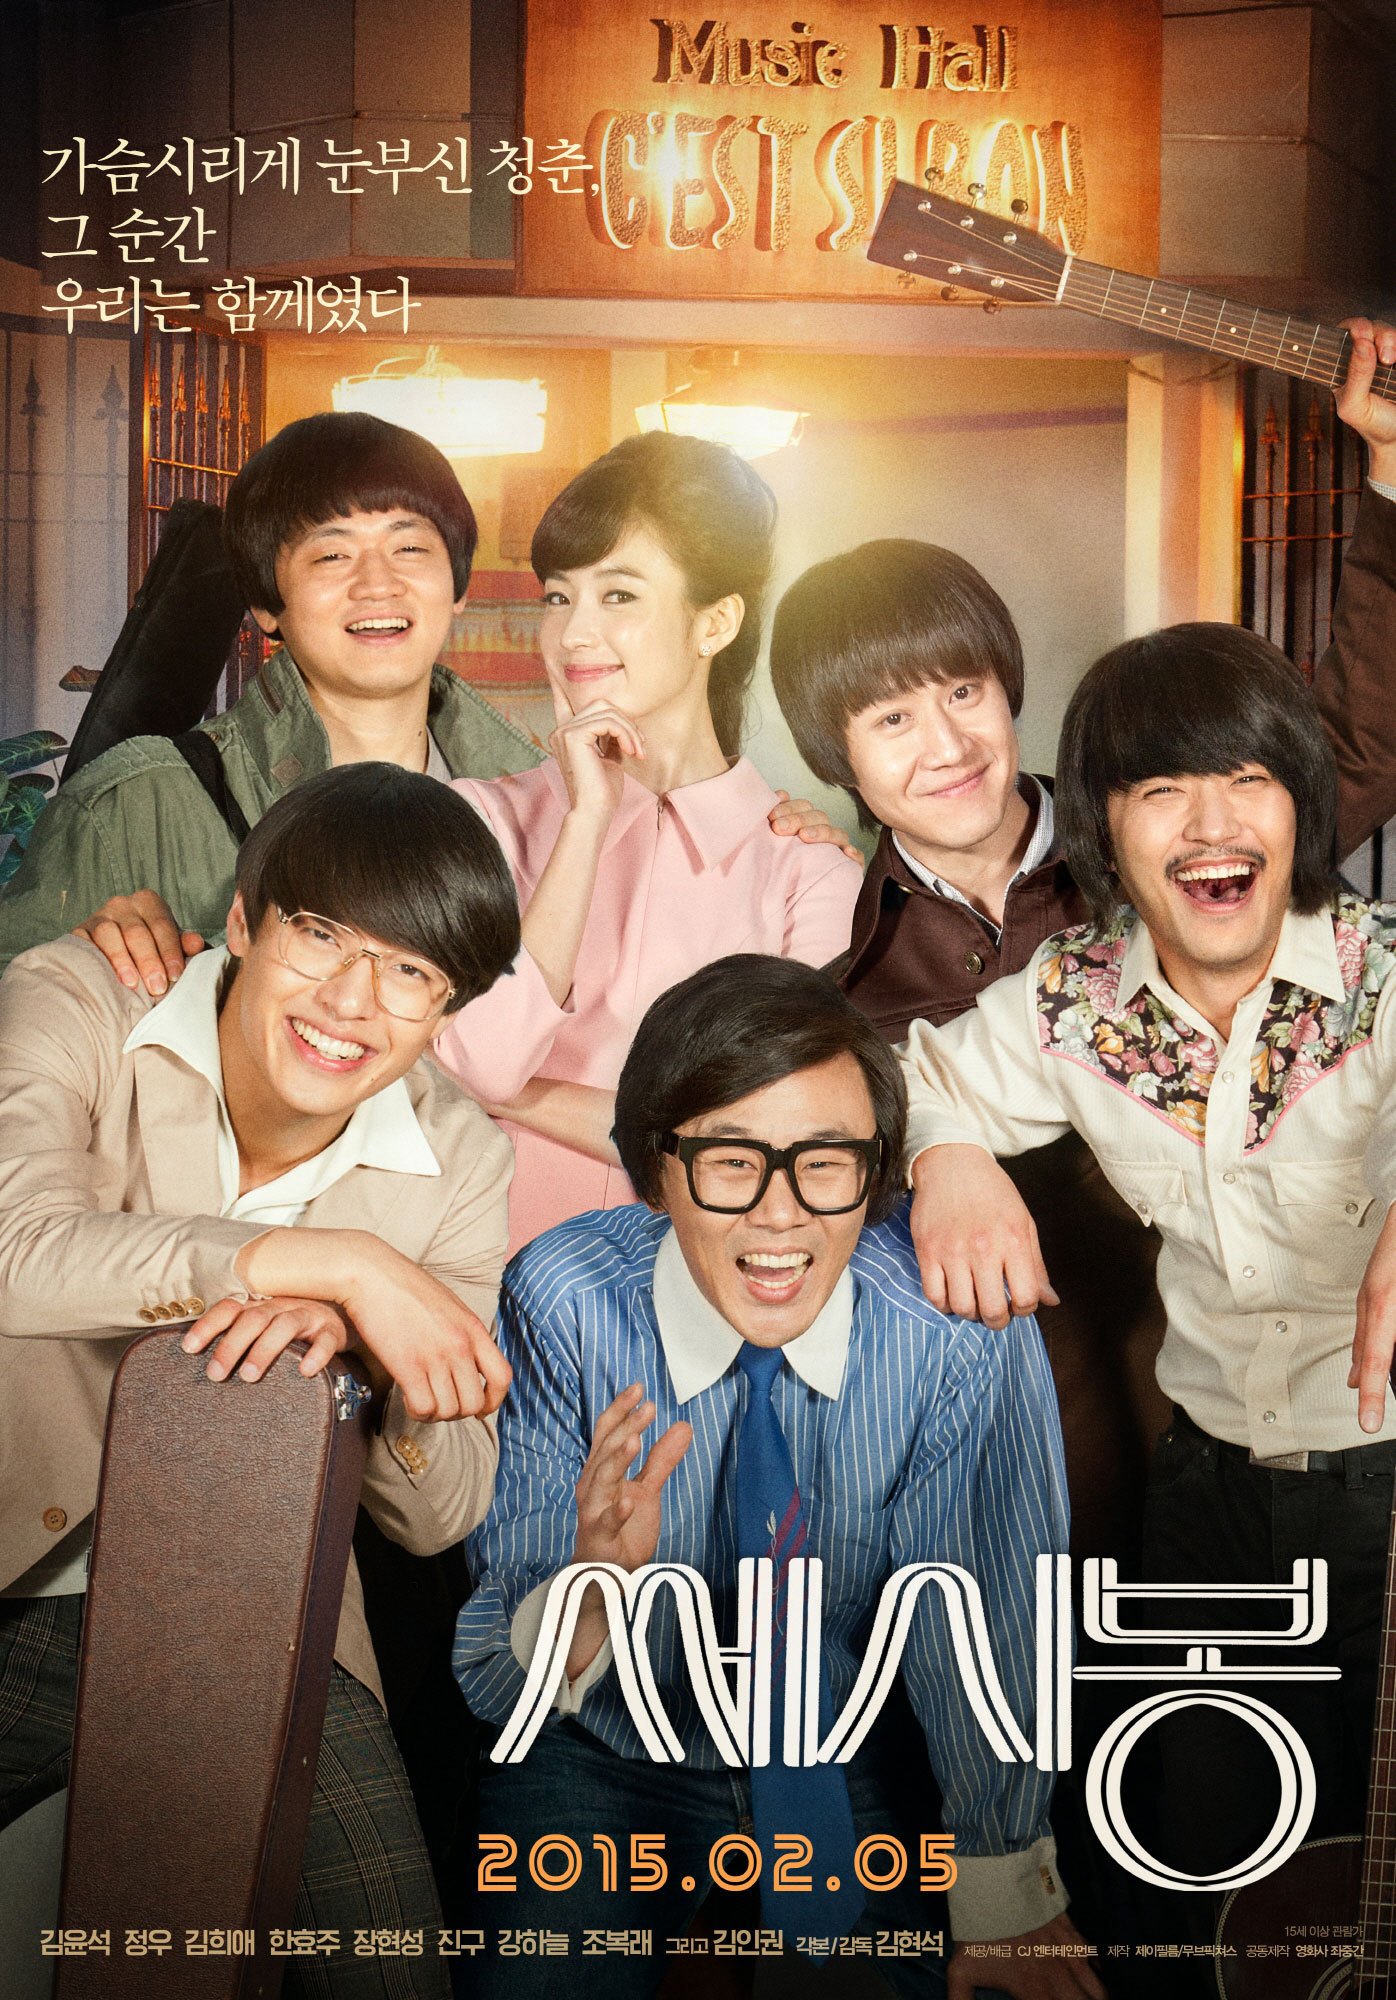 free, movie, download, 2015, ryemovies, ganool, film korea update, C'est si bon